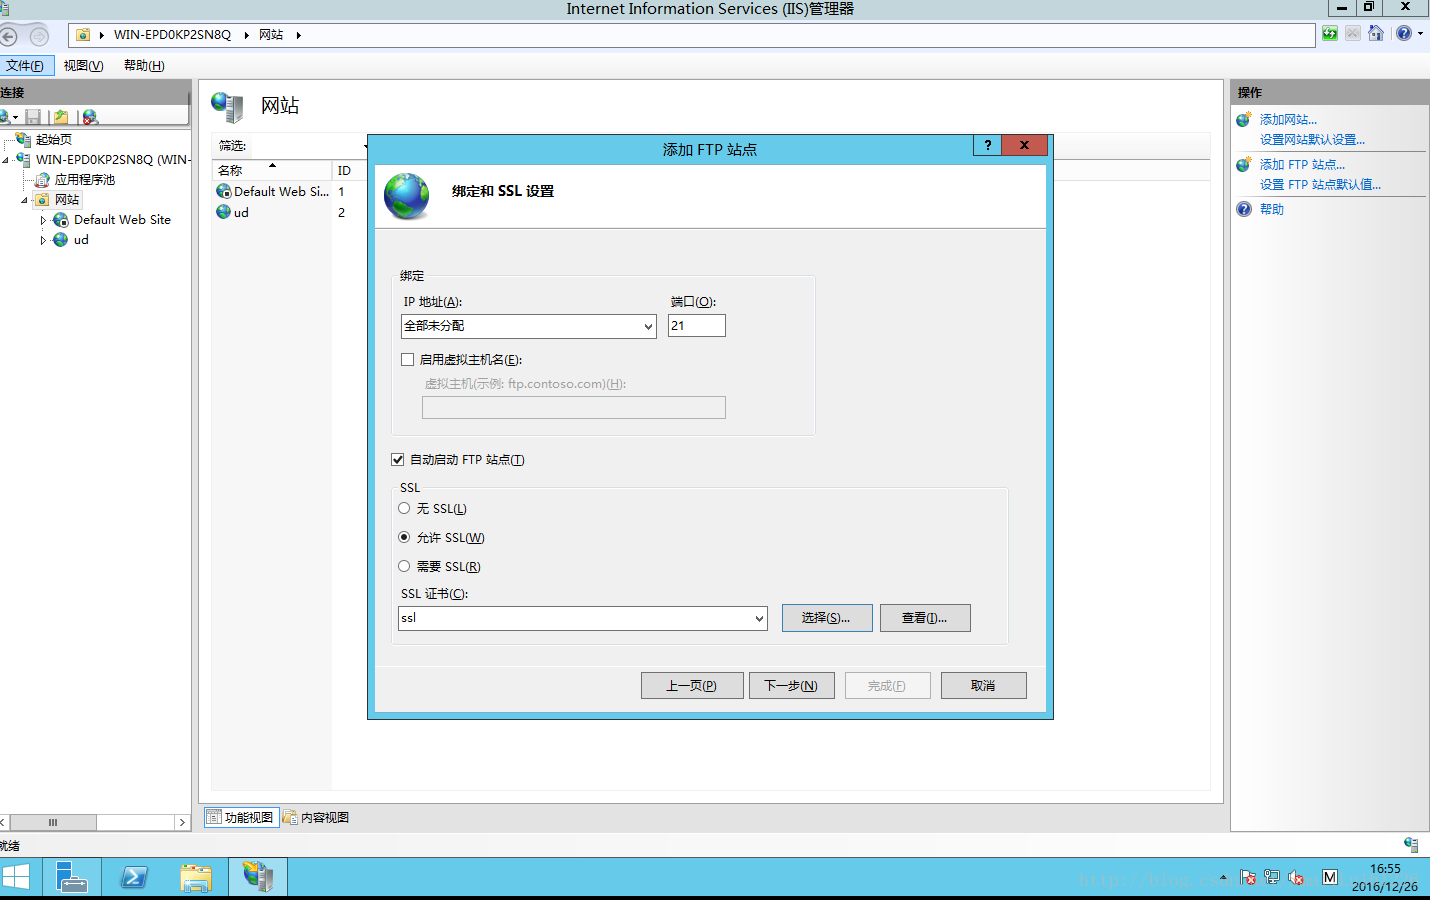 Windows Server2012 R2 FTP服务器配置图文教程